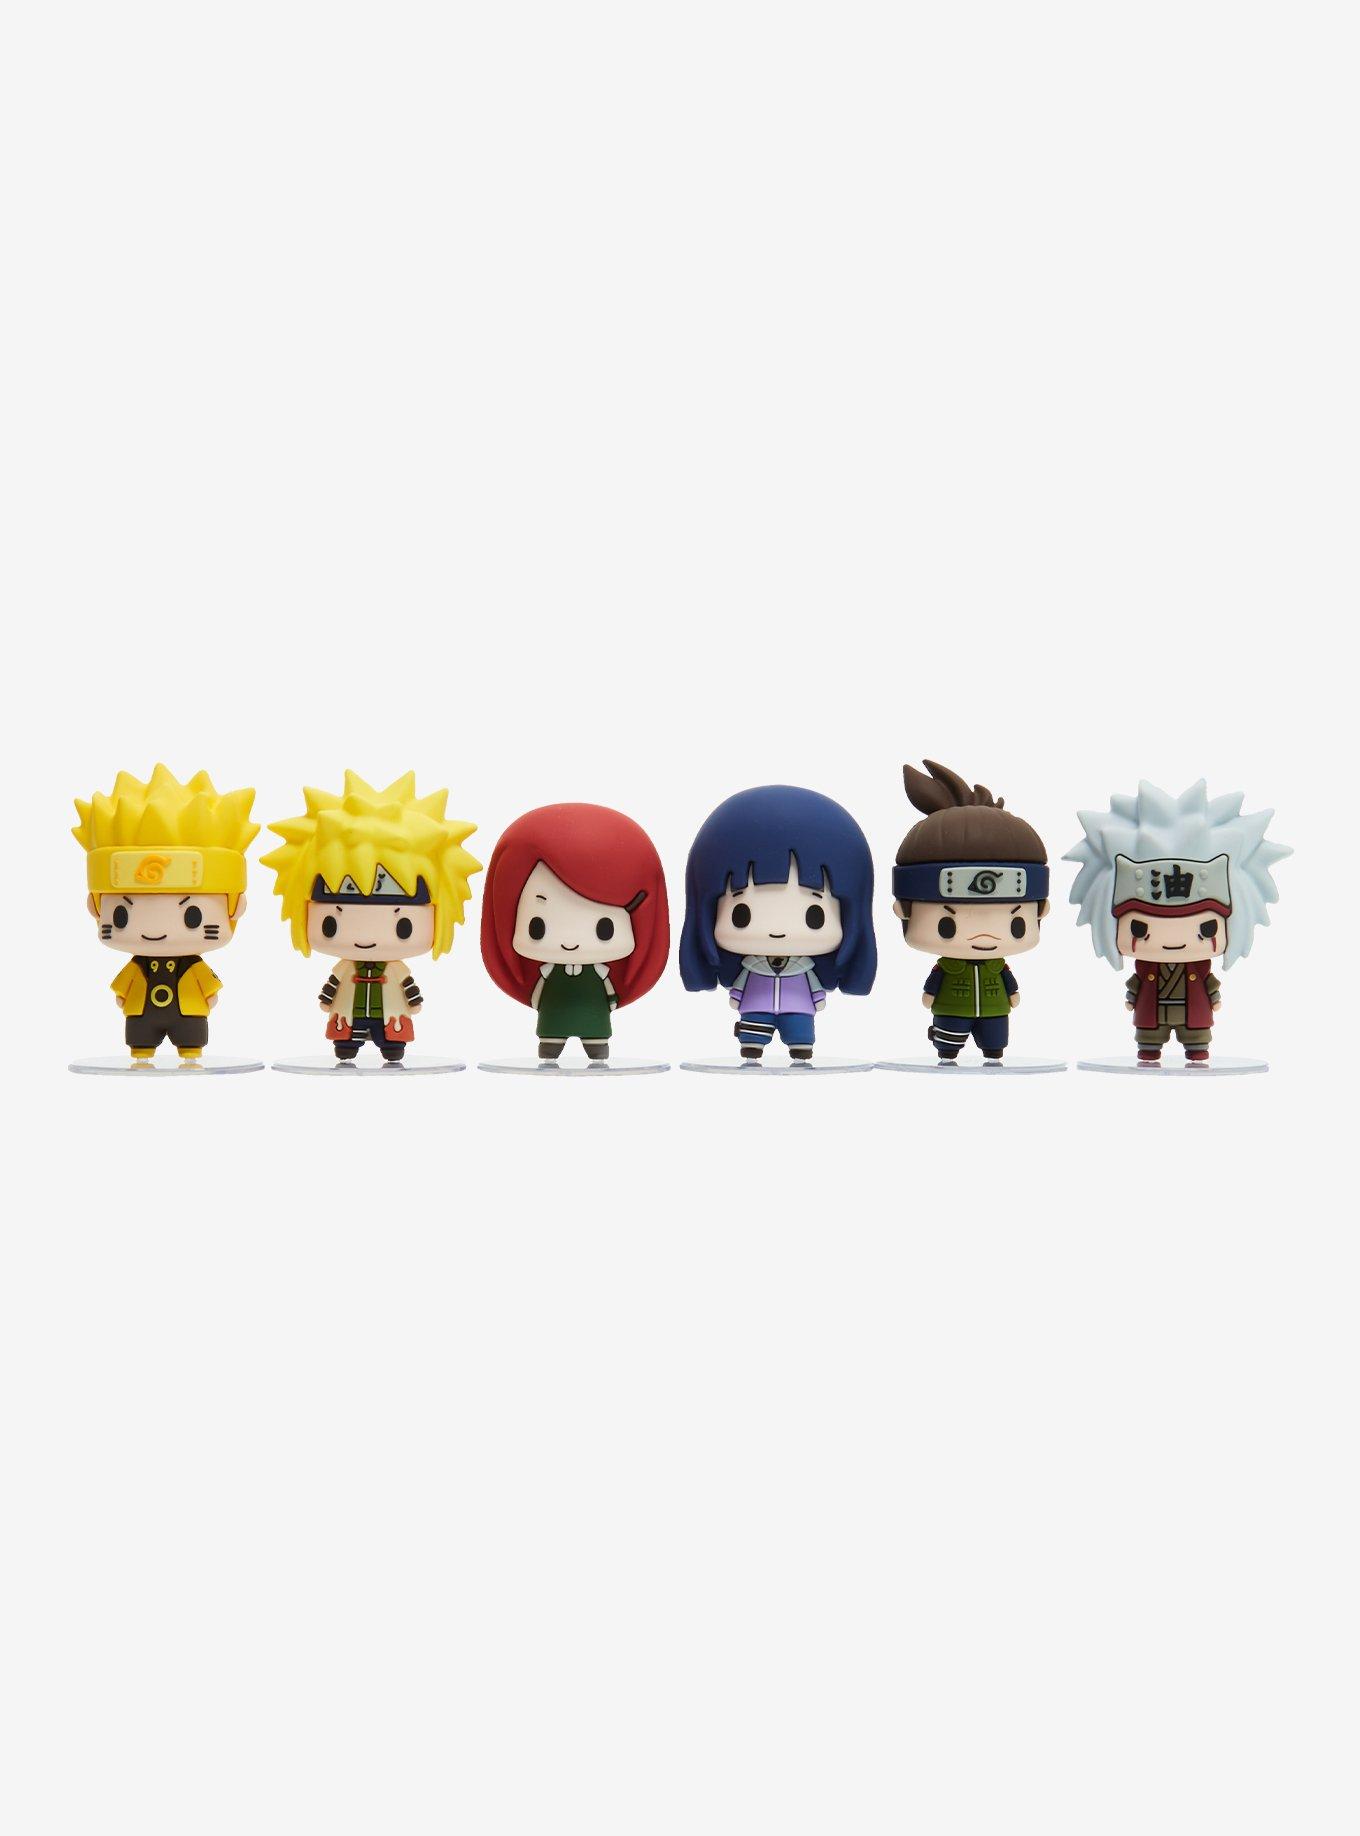 Bandai Naruto: Shippuden Characters Chokorin Mascot Series Volume